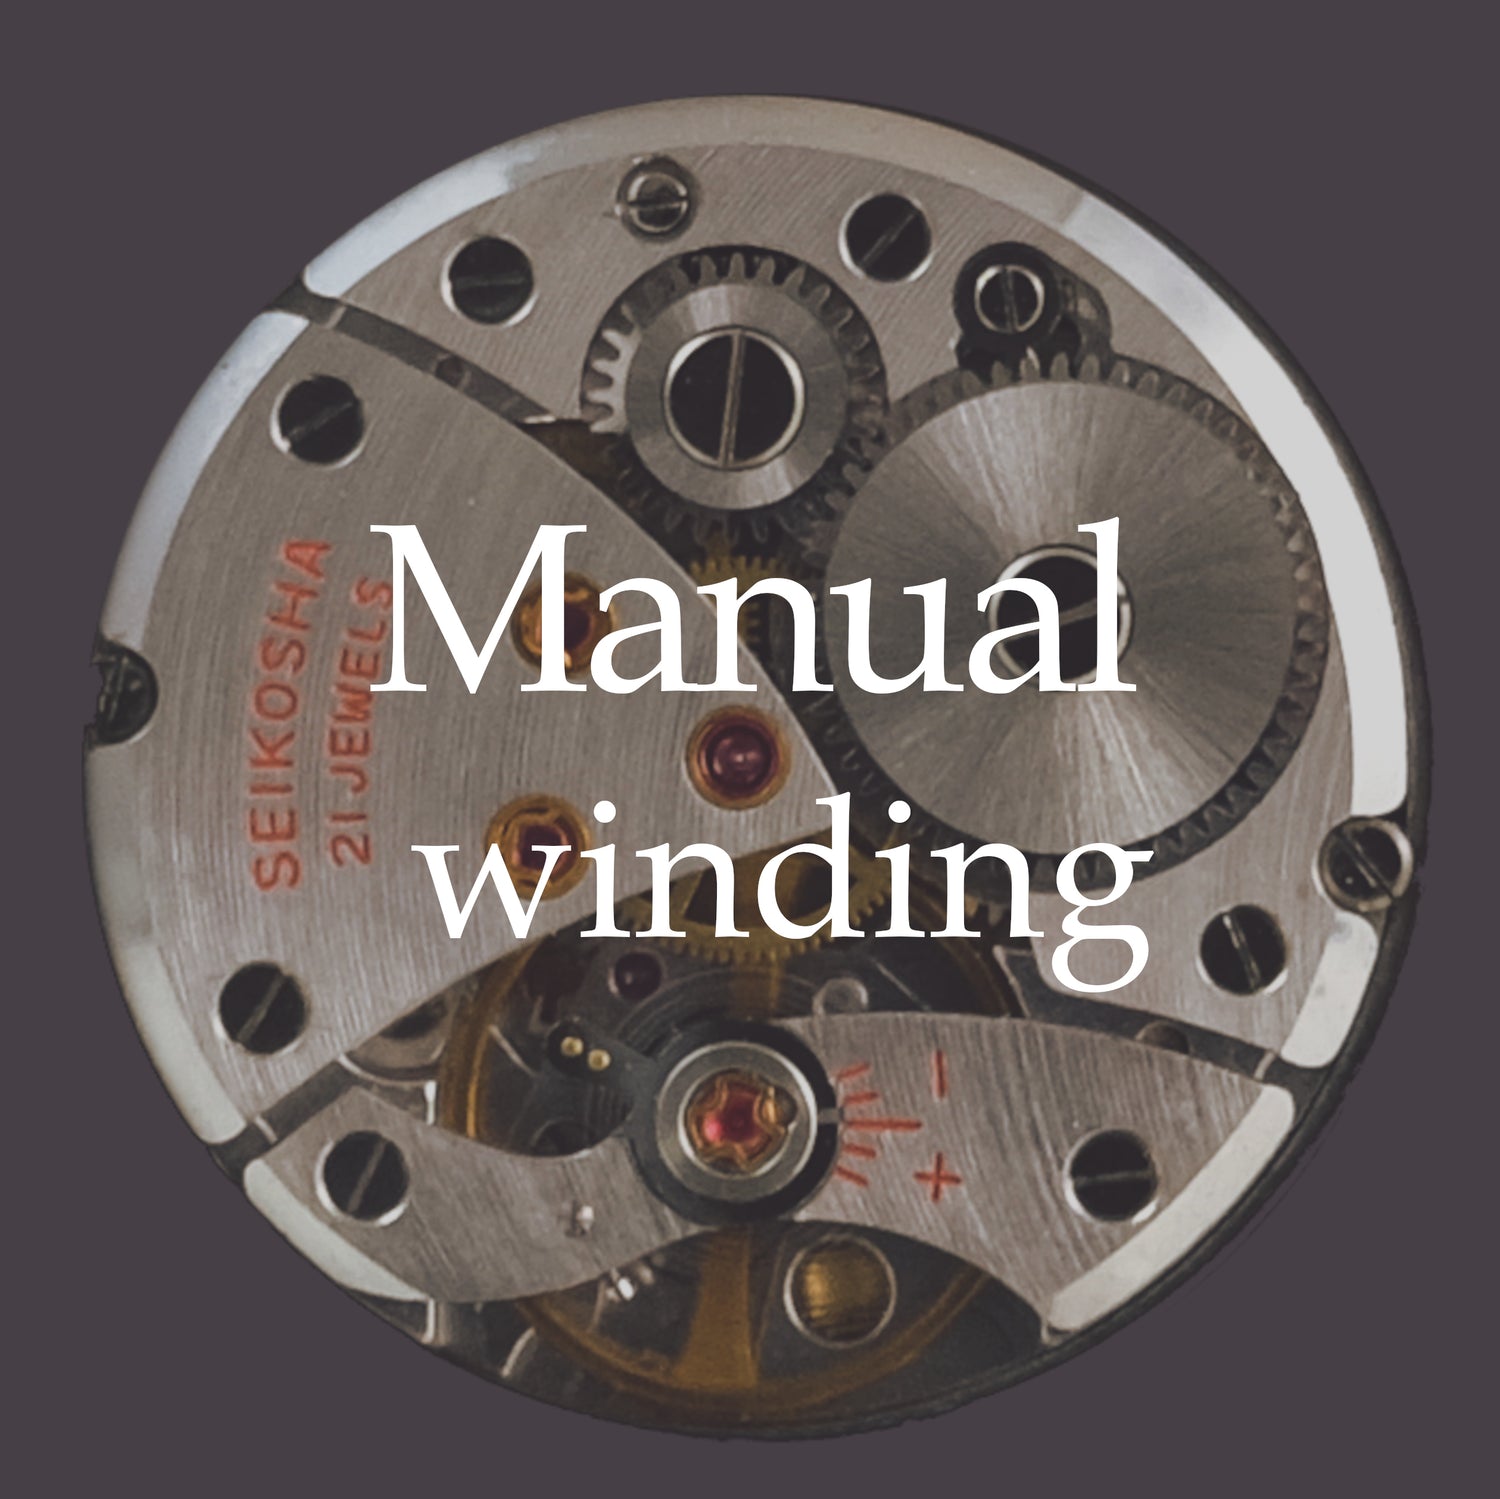 Manual winding